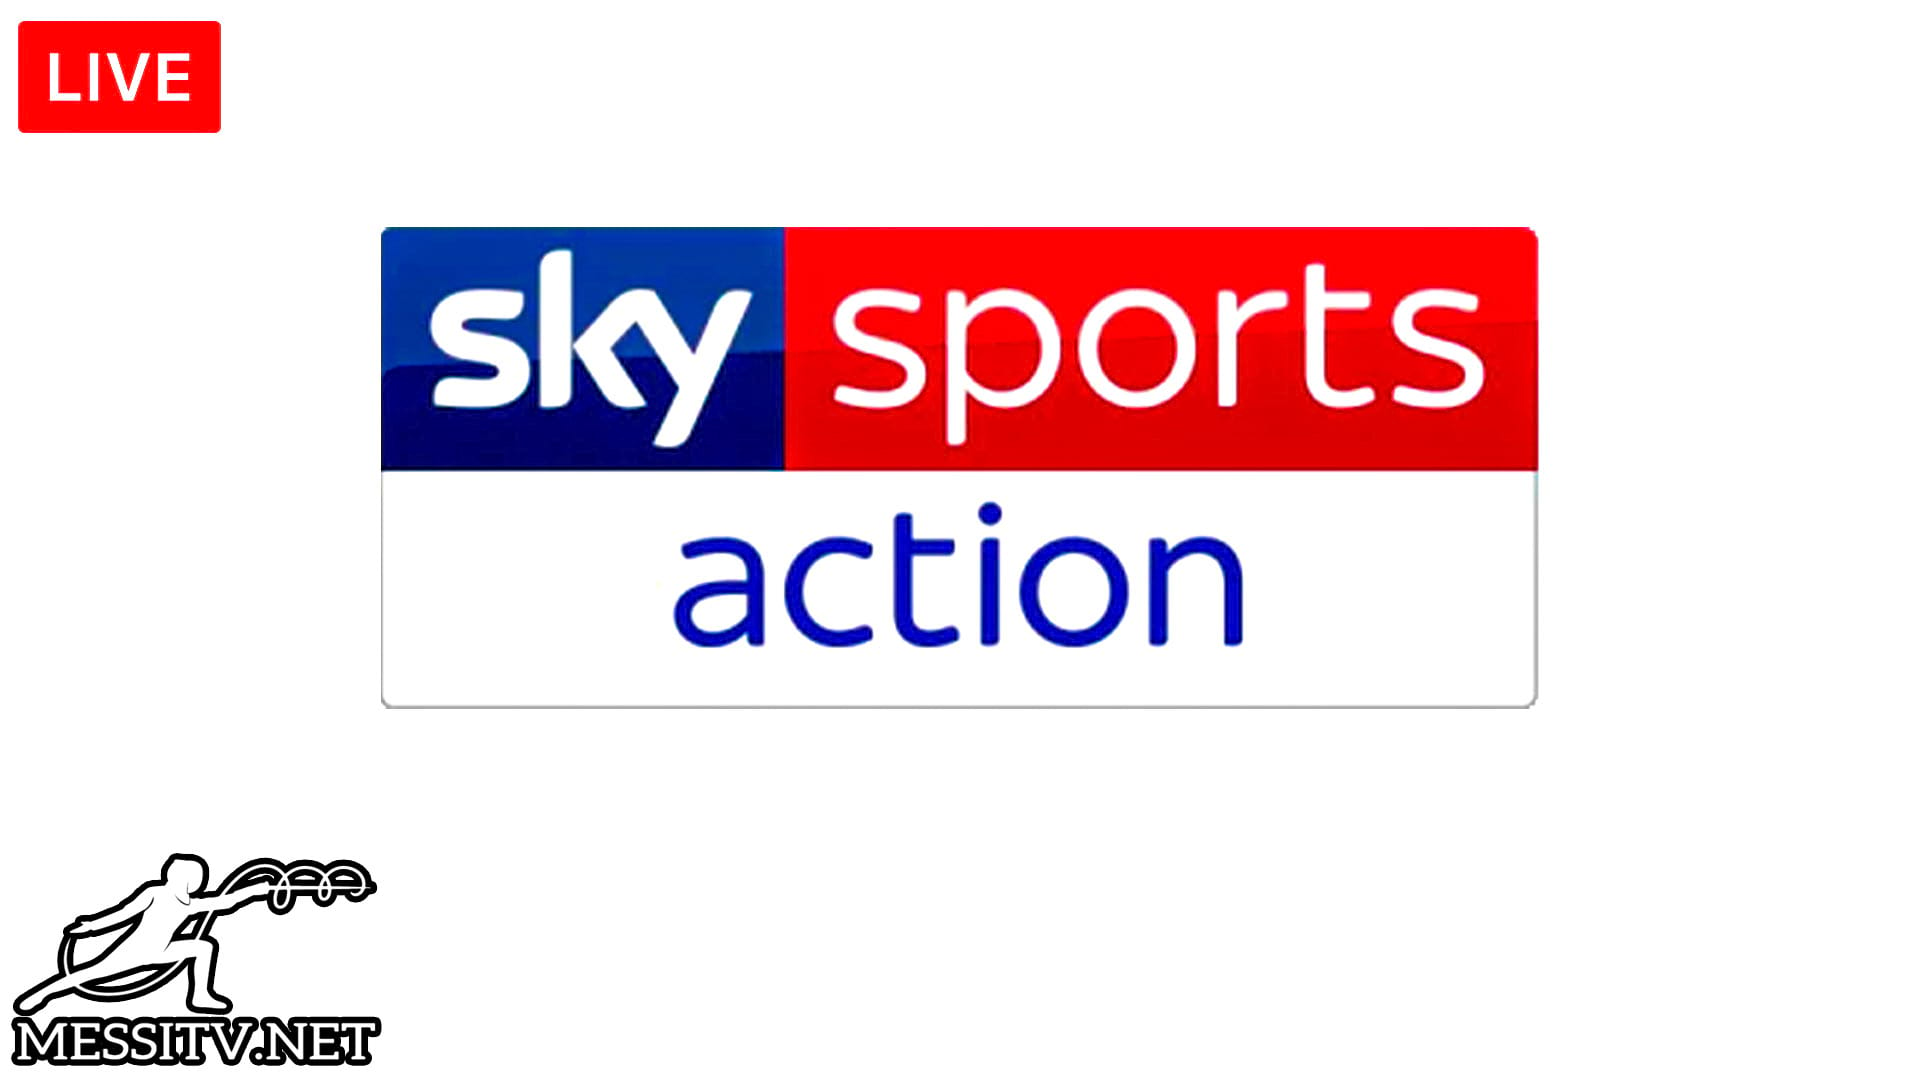 Sky Sport Nba, Sky Sport Motogp, Sky Sports Arena Hd, Sky Sports Premier League Hd, Sky Sports Mix Hd, Sky Sports Racing Hd, SKY Sports Action Hd, Sky Sports F1 Hd, Sky Sports Cricket Hd